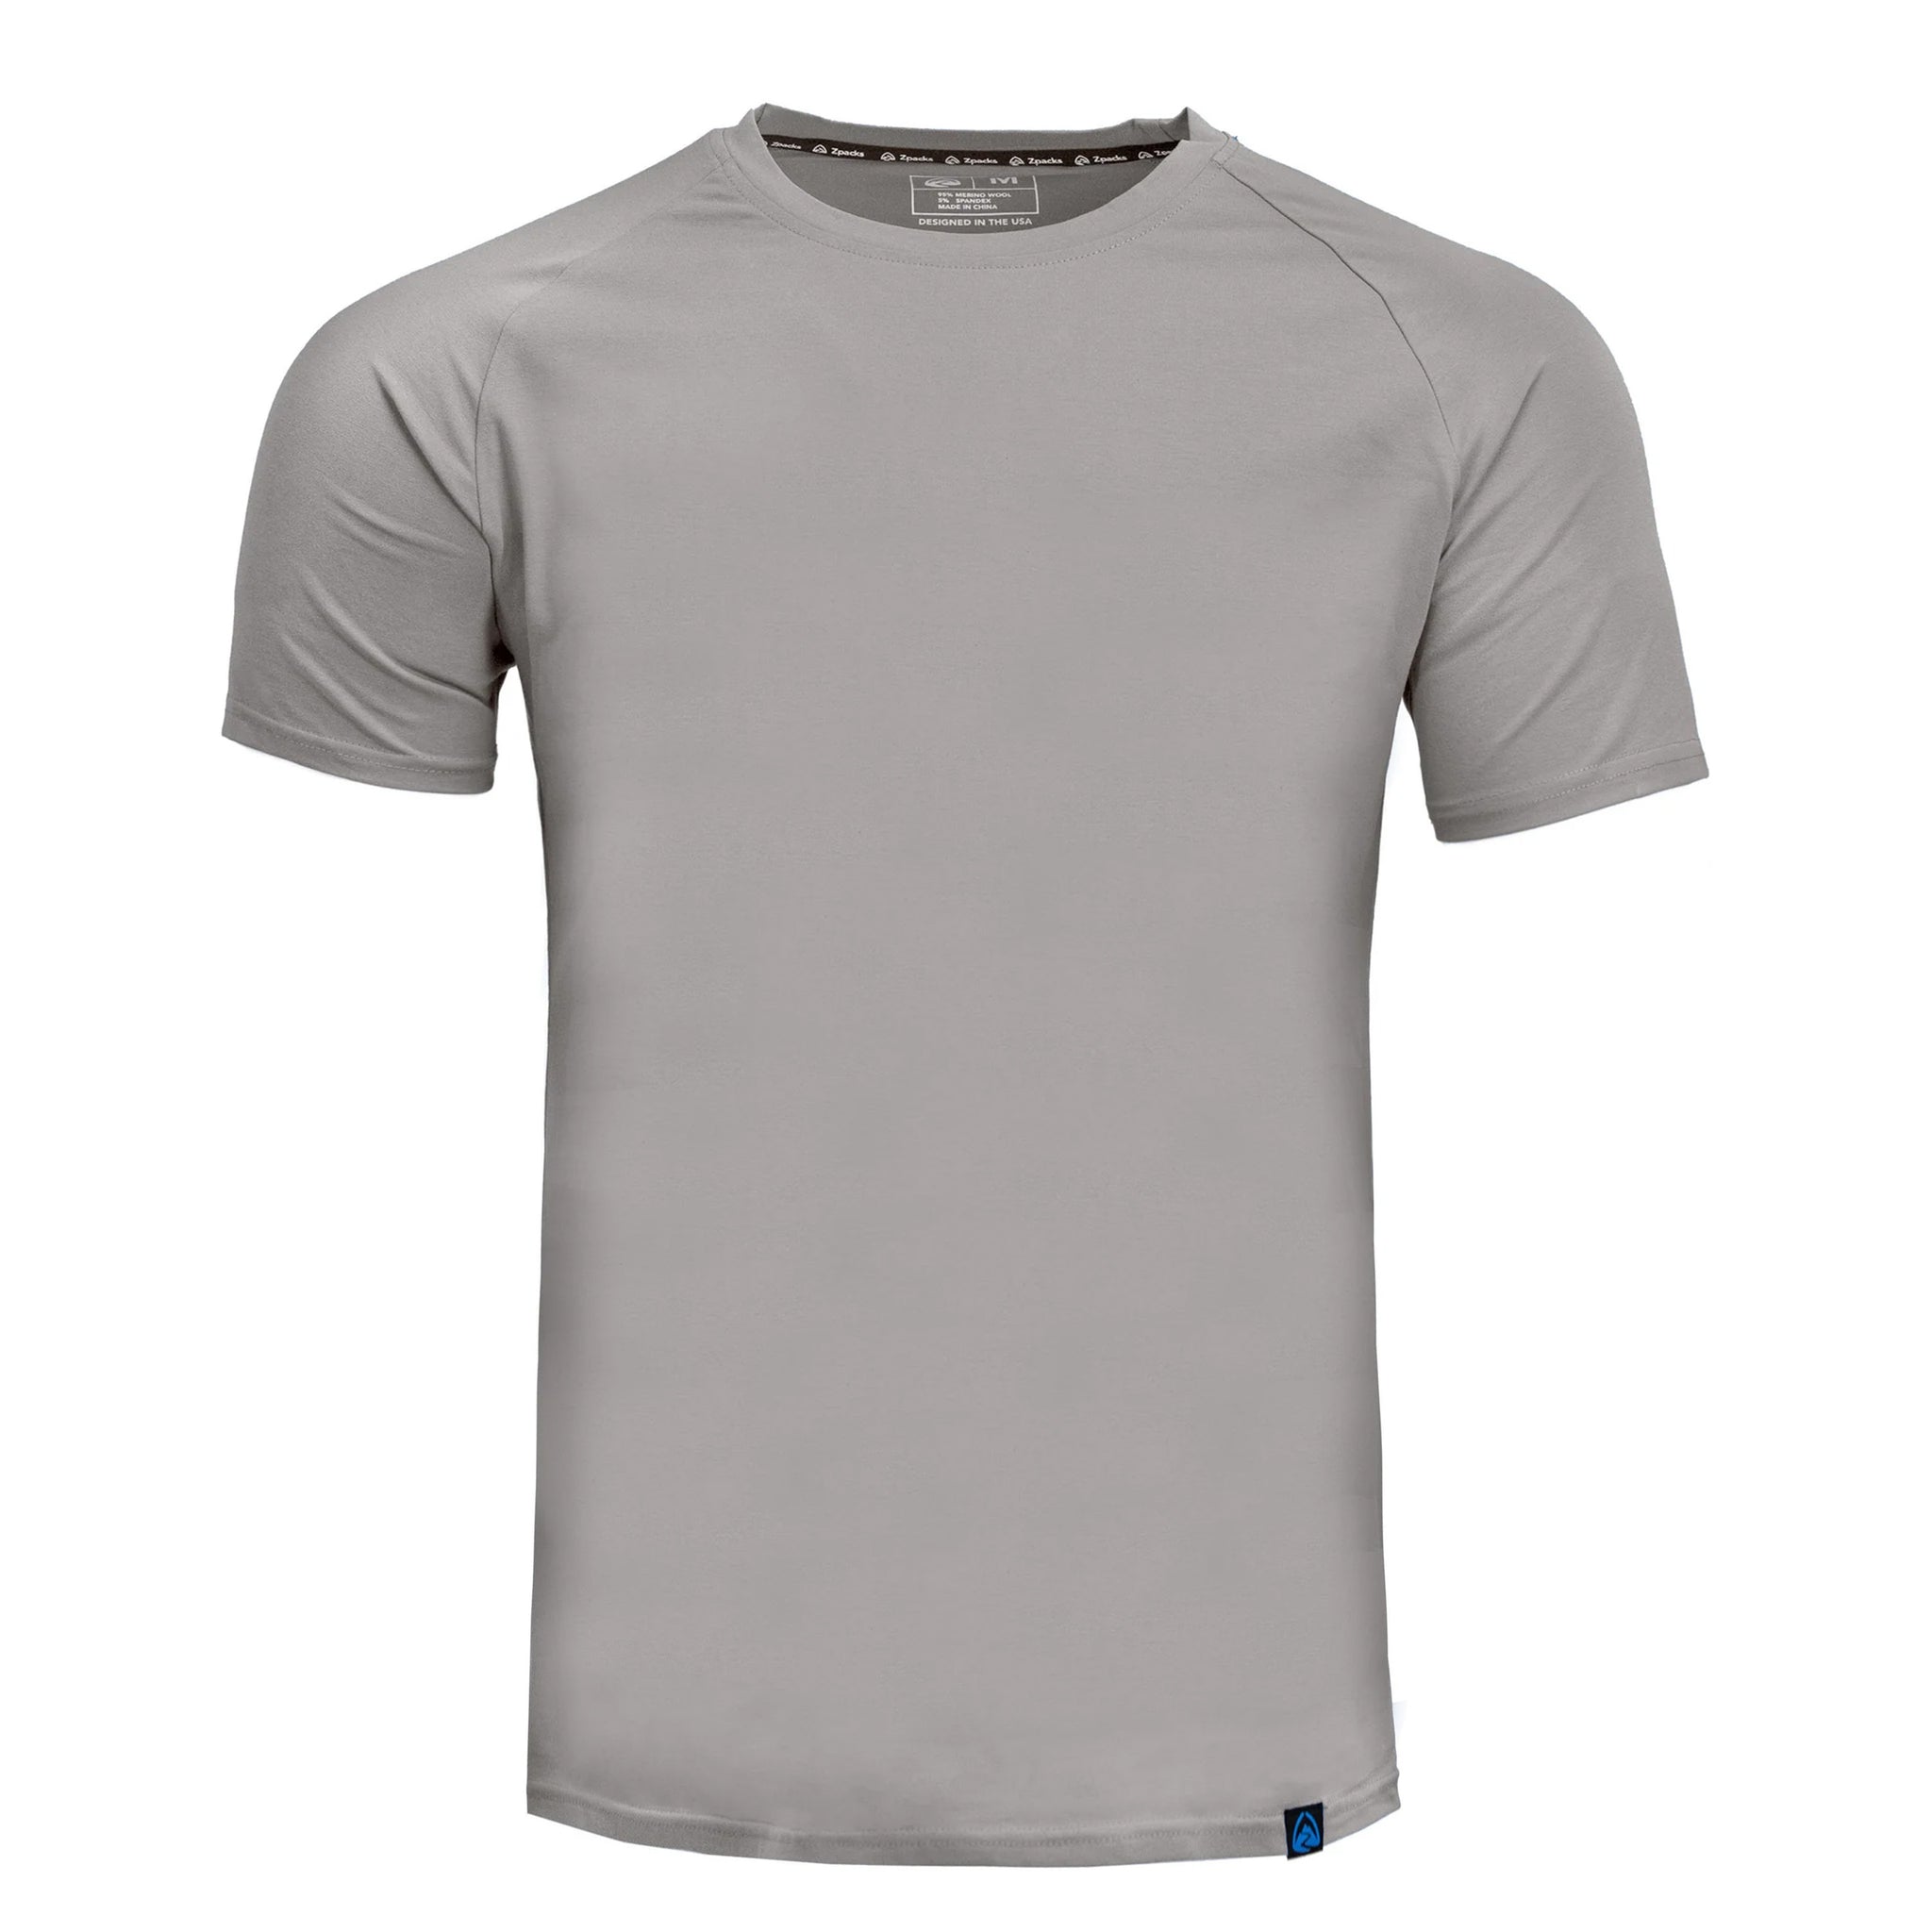 Cool Wool Zpacks Merino Trail T-Shirt